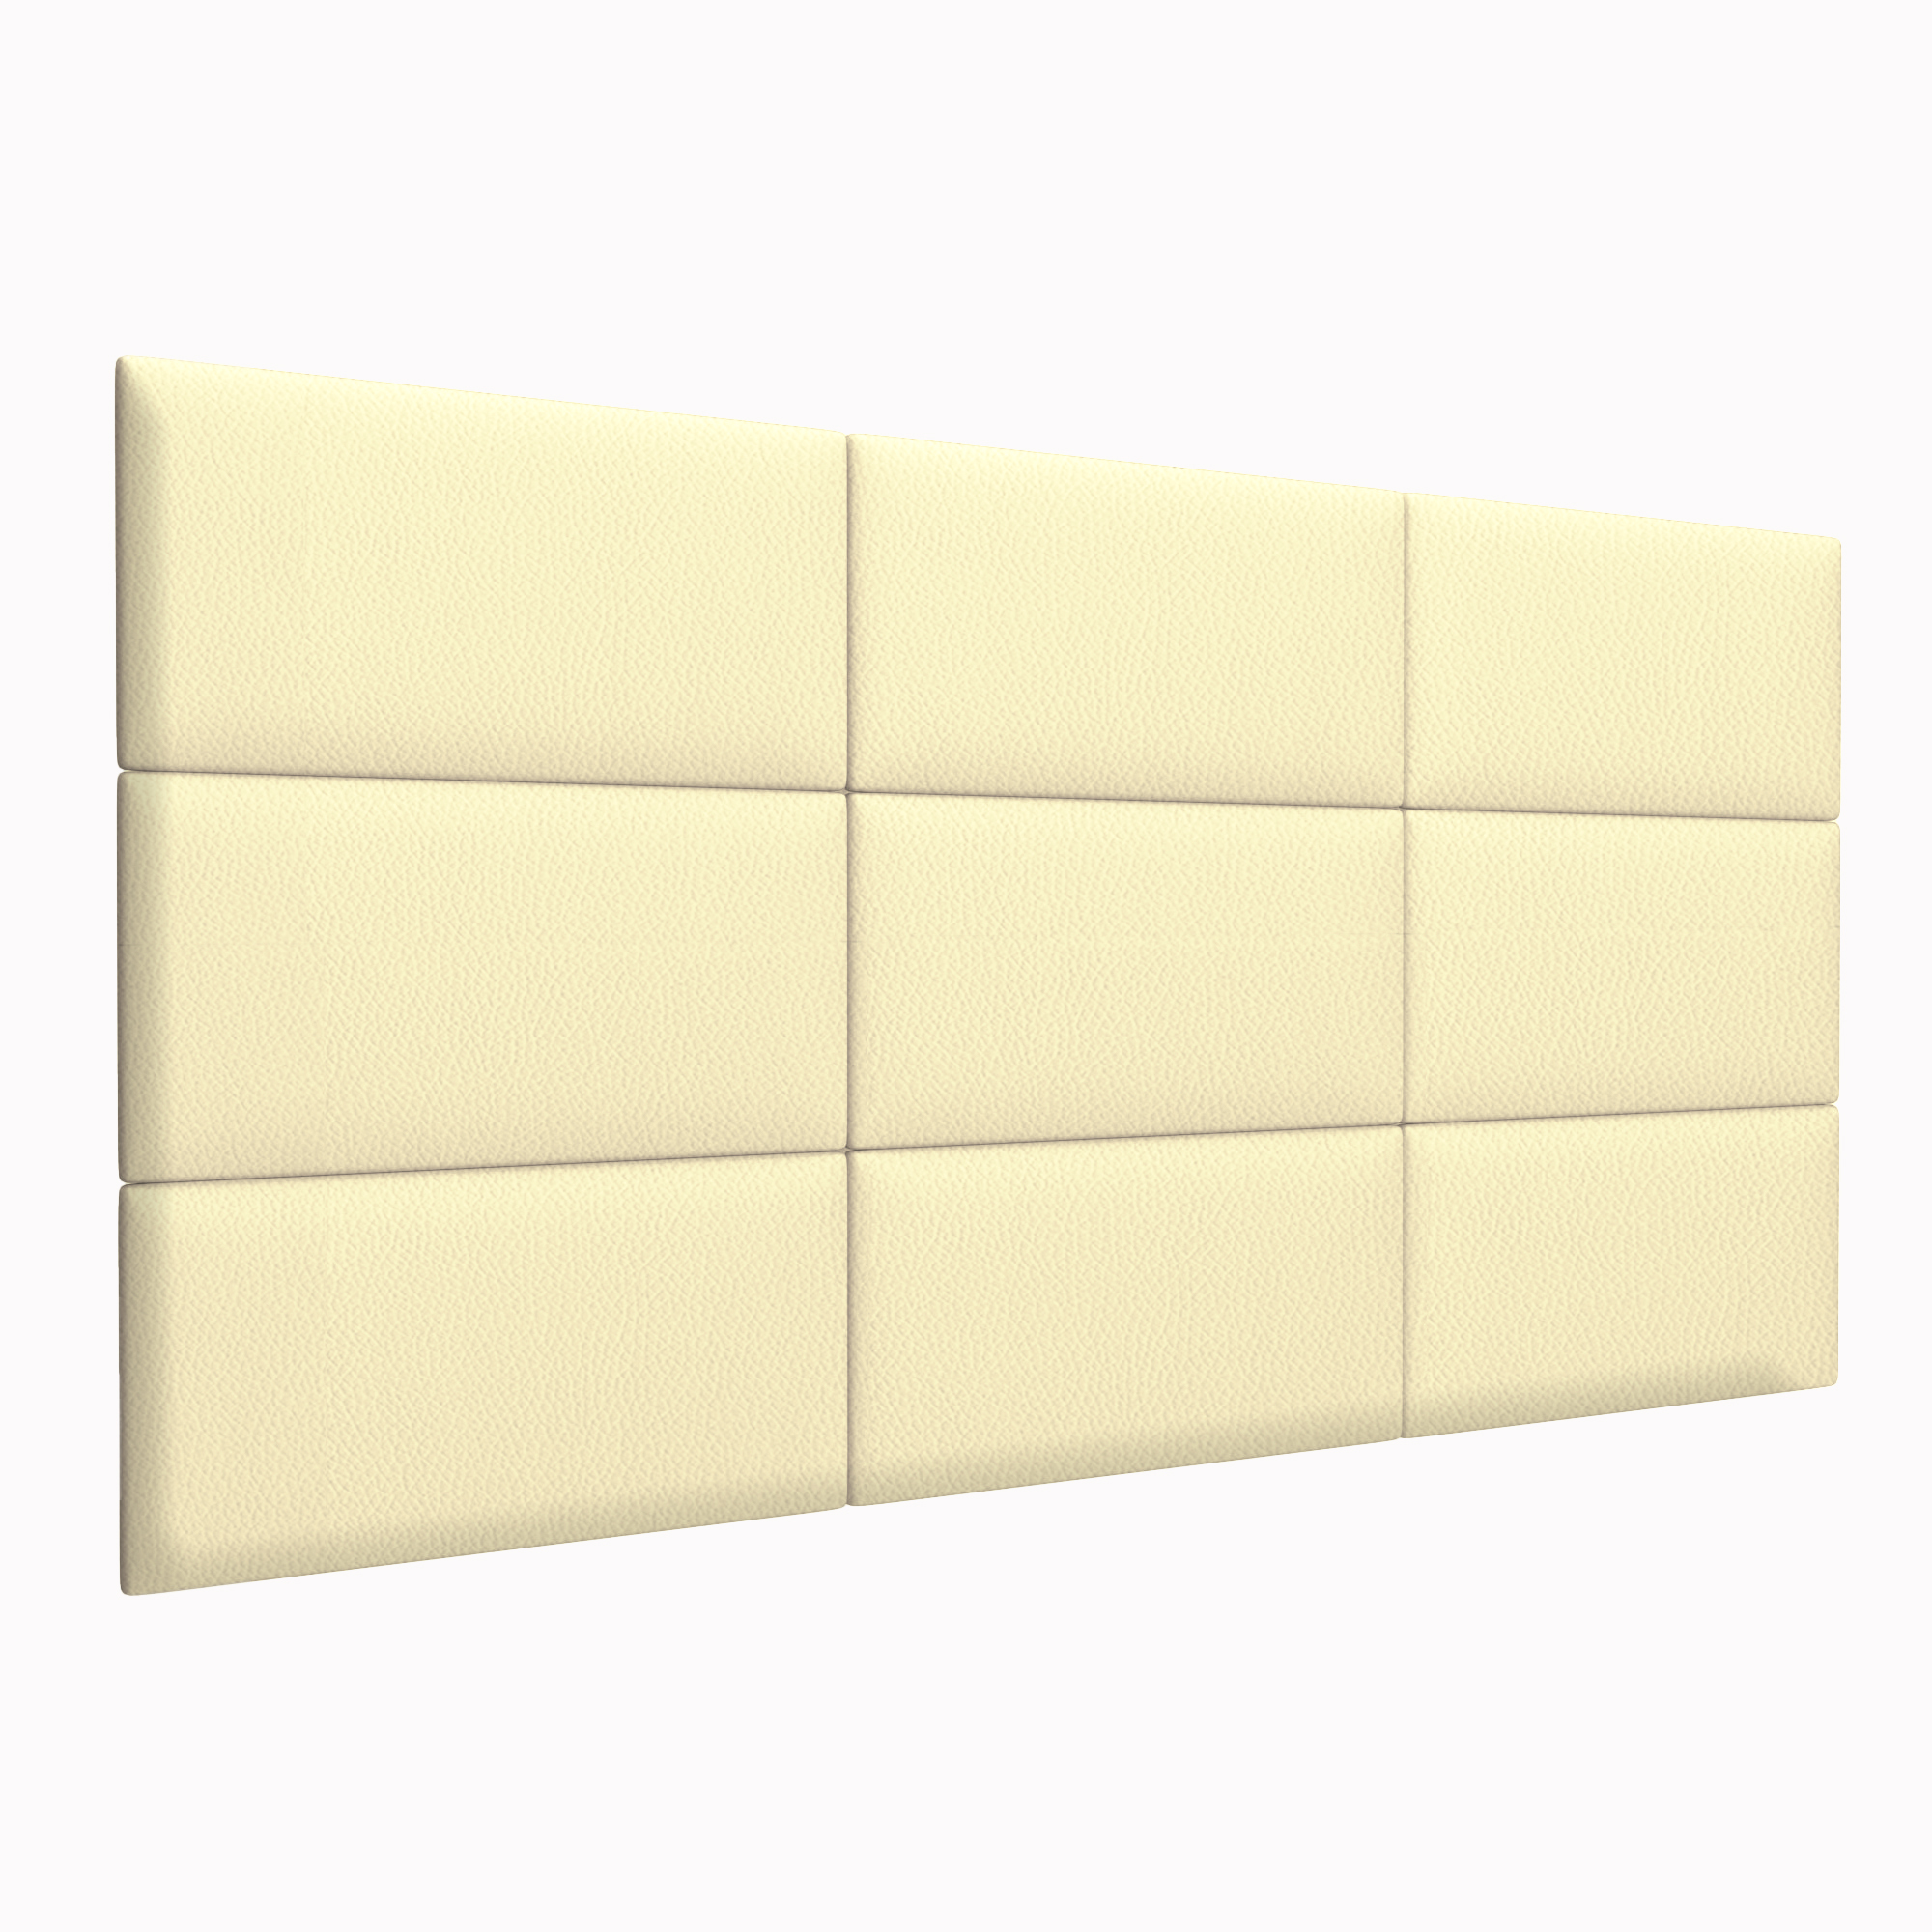 Мягкие стеновые панели Eco Leather Vanilla 30х60 см 2 шт.